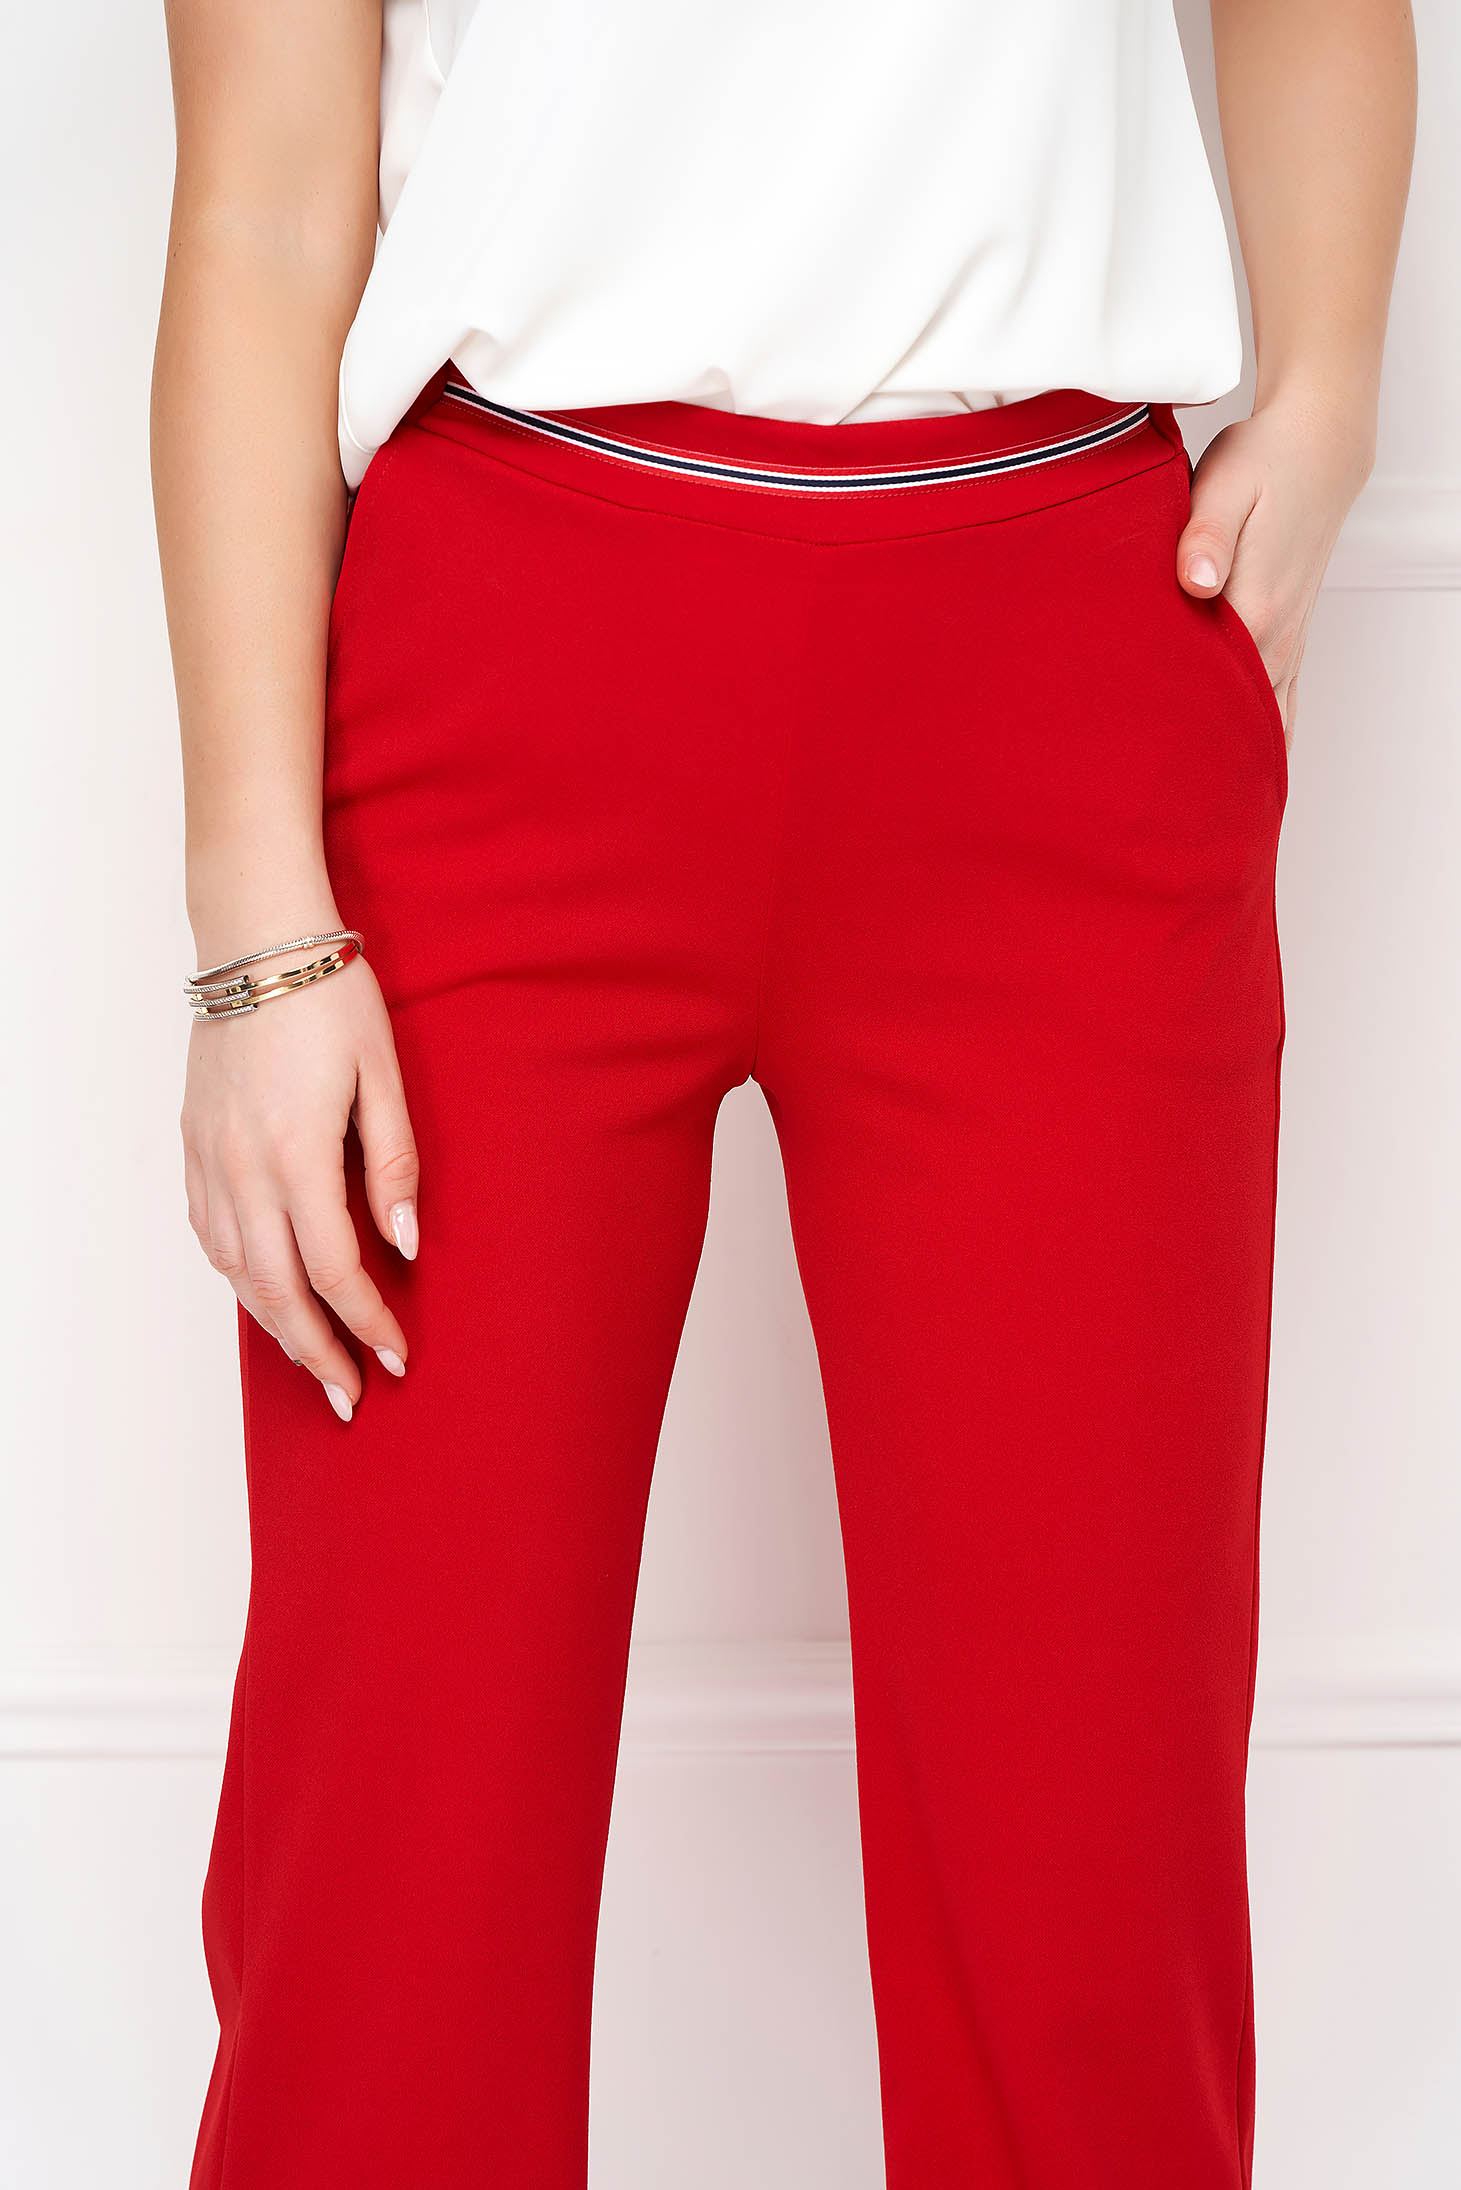 Pantaloni din crep rosii lungi evazati cu buzunare - StarShinerS 5 - StarShinerS.ro